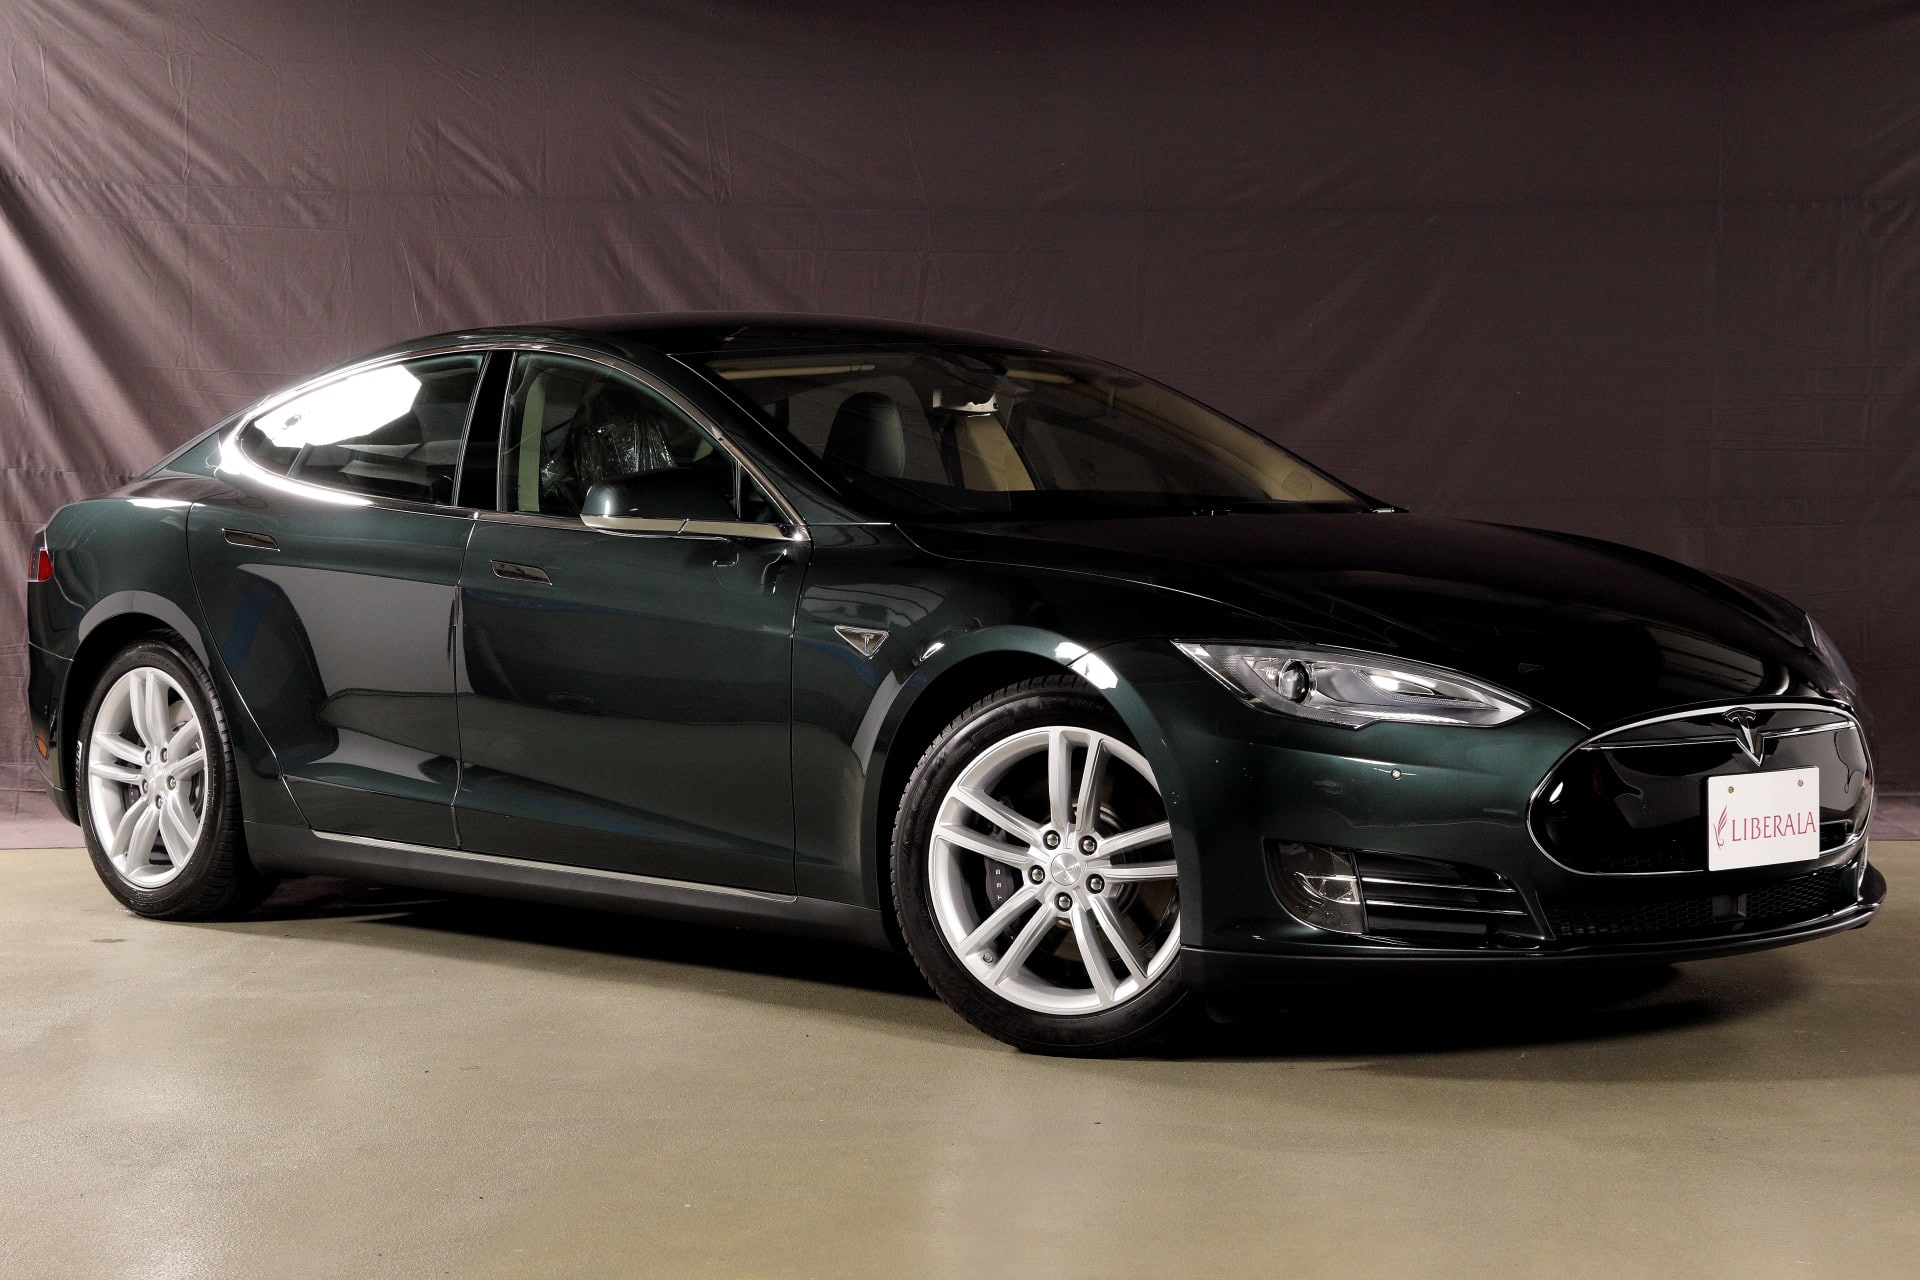 Ontwaken krassen bladeren Tesla Motors Model S (2014年式) 在庫詳細／4506 | LIBERALAでテスラモーターズ モデルSを検索